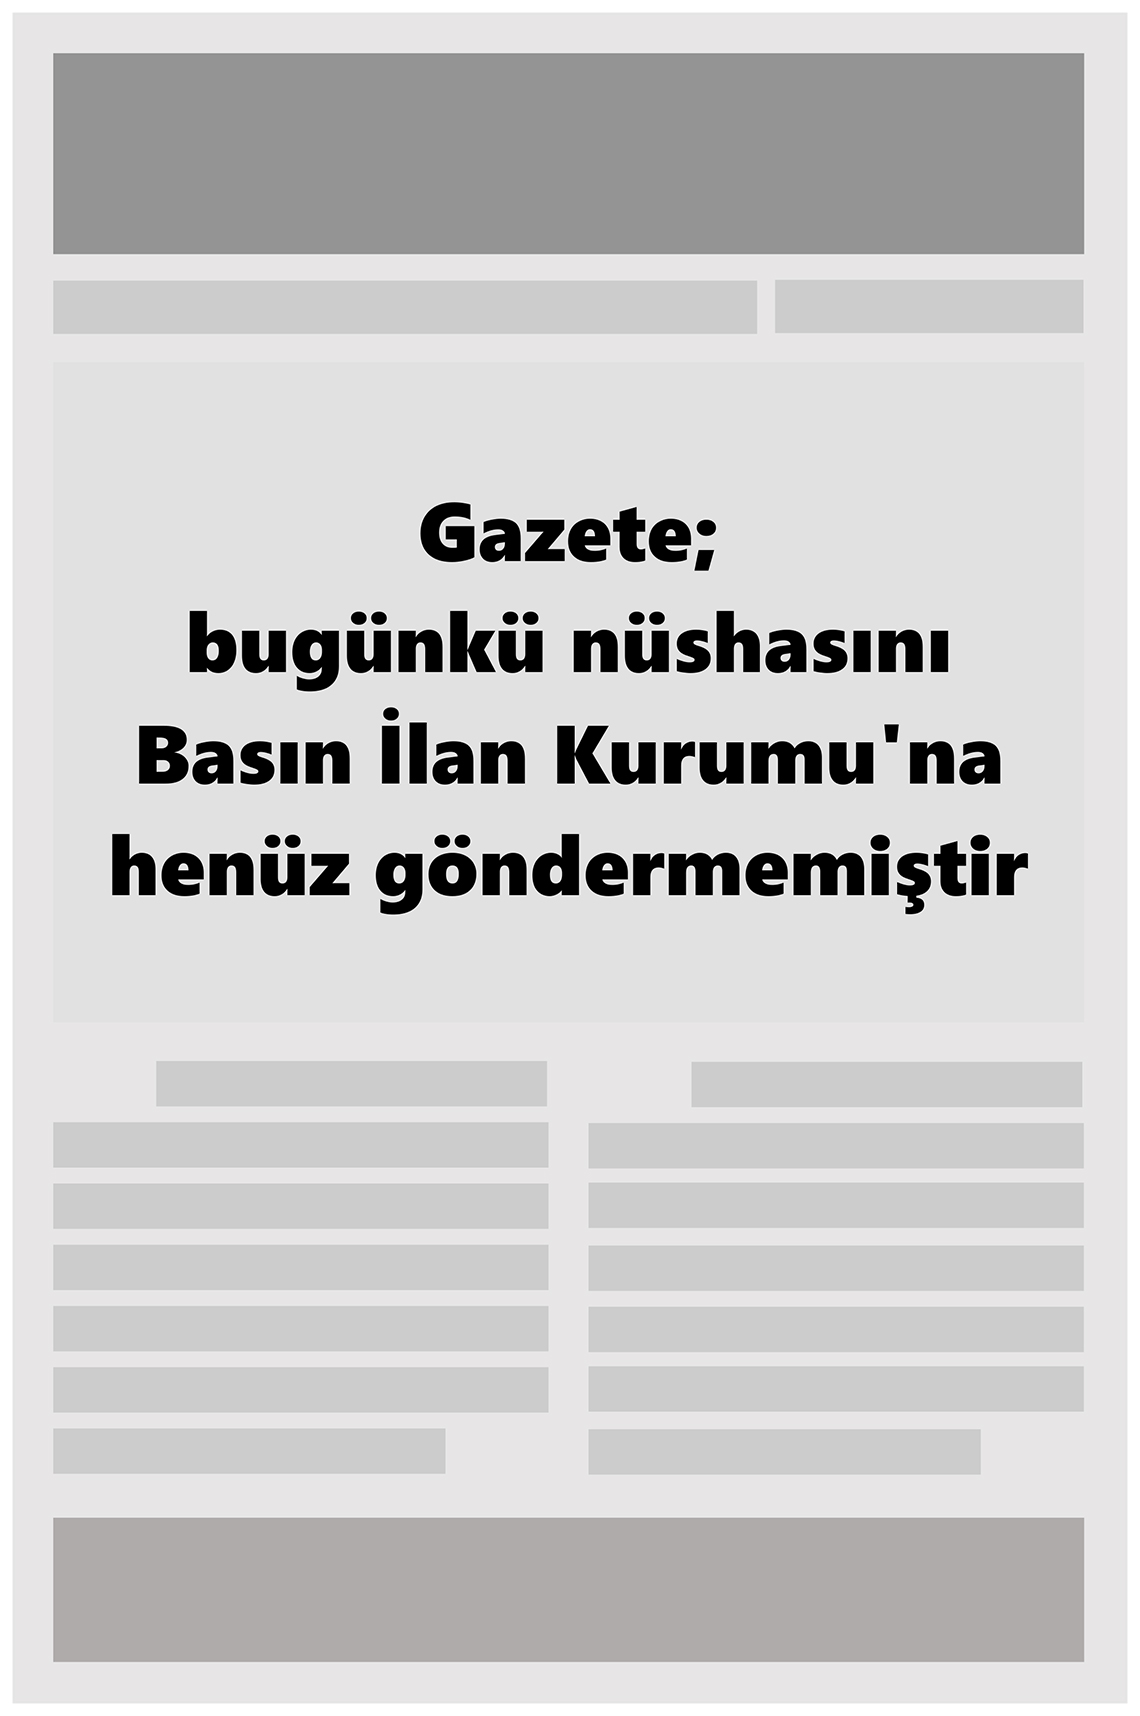 14 Ağustos 2022 Gazete 3 Gazete Manşeti